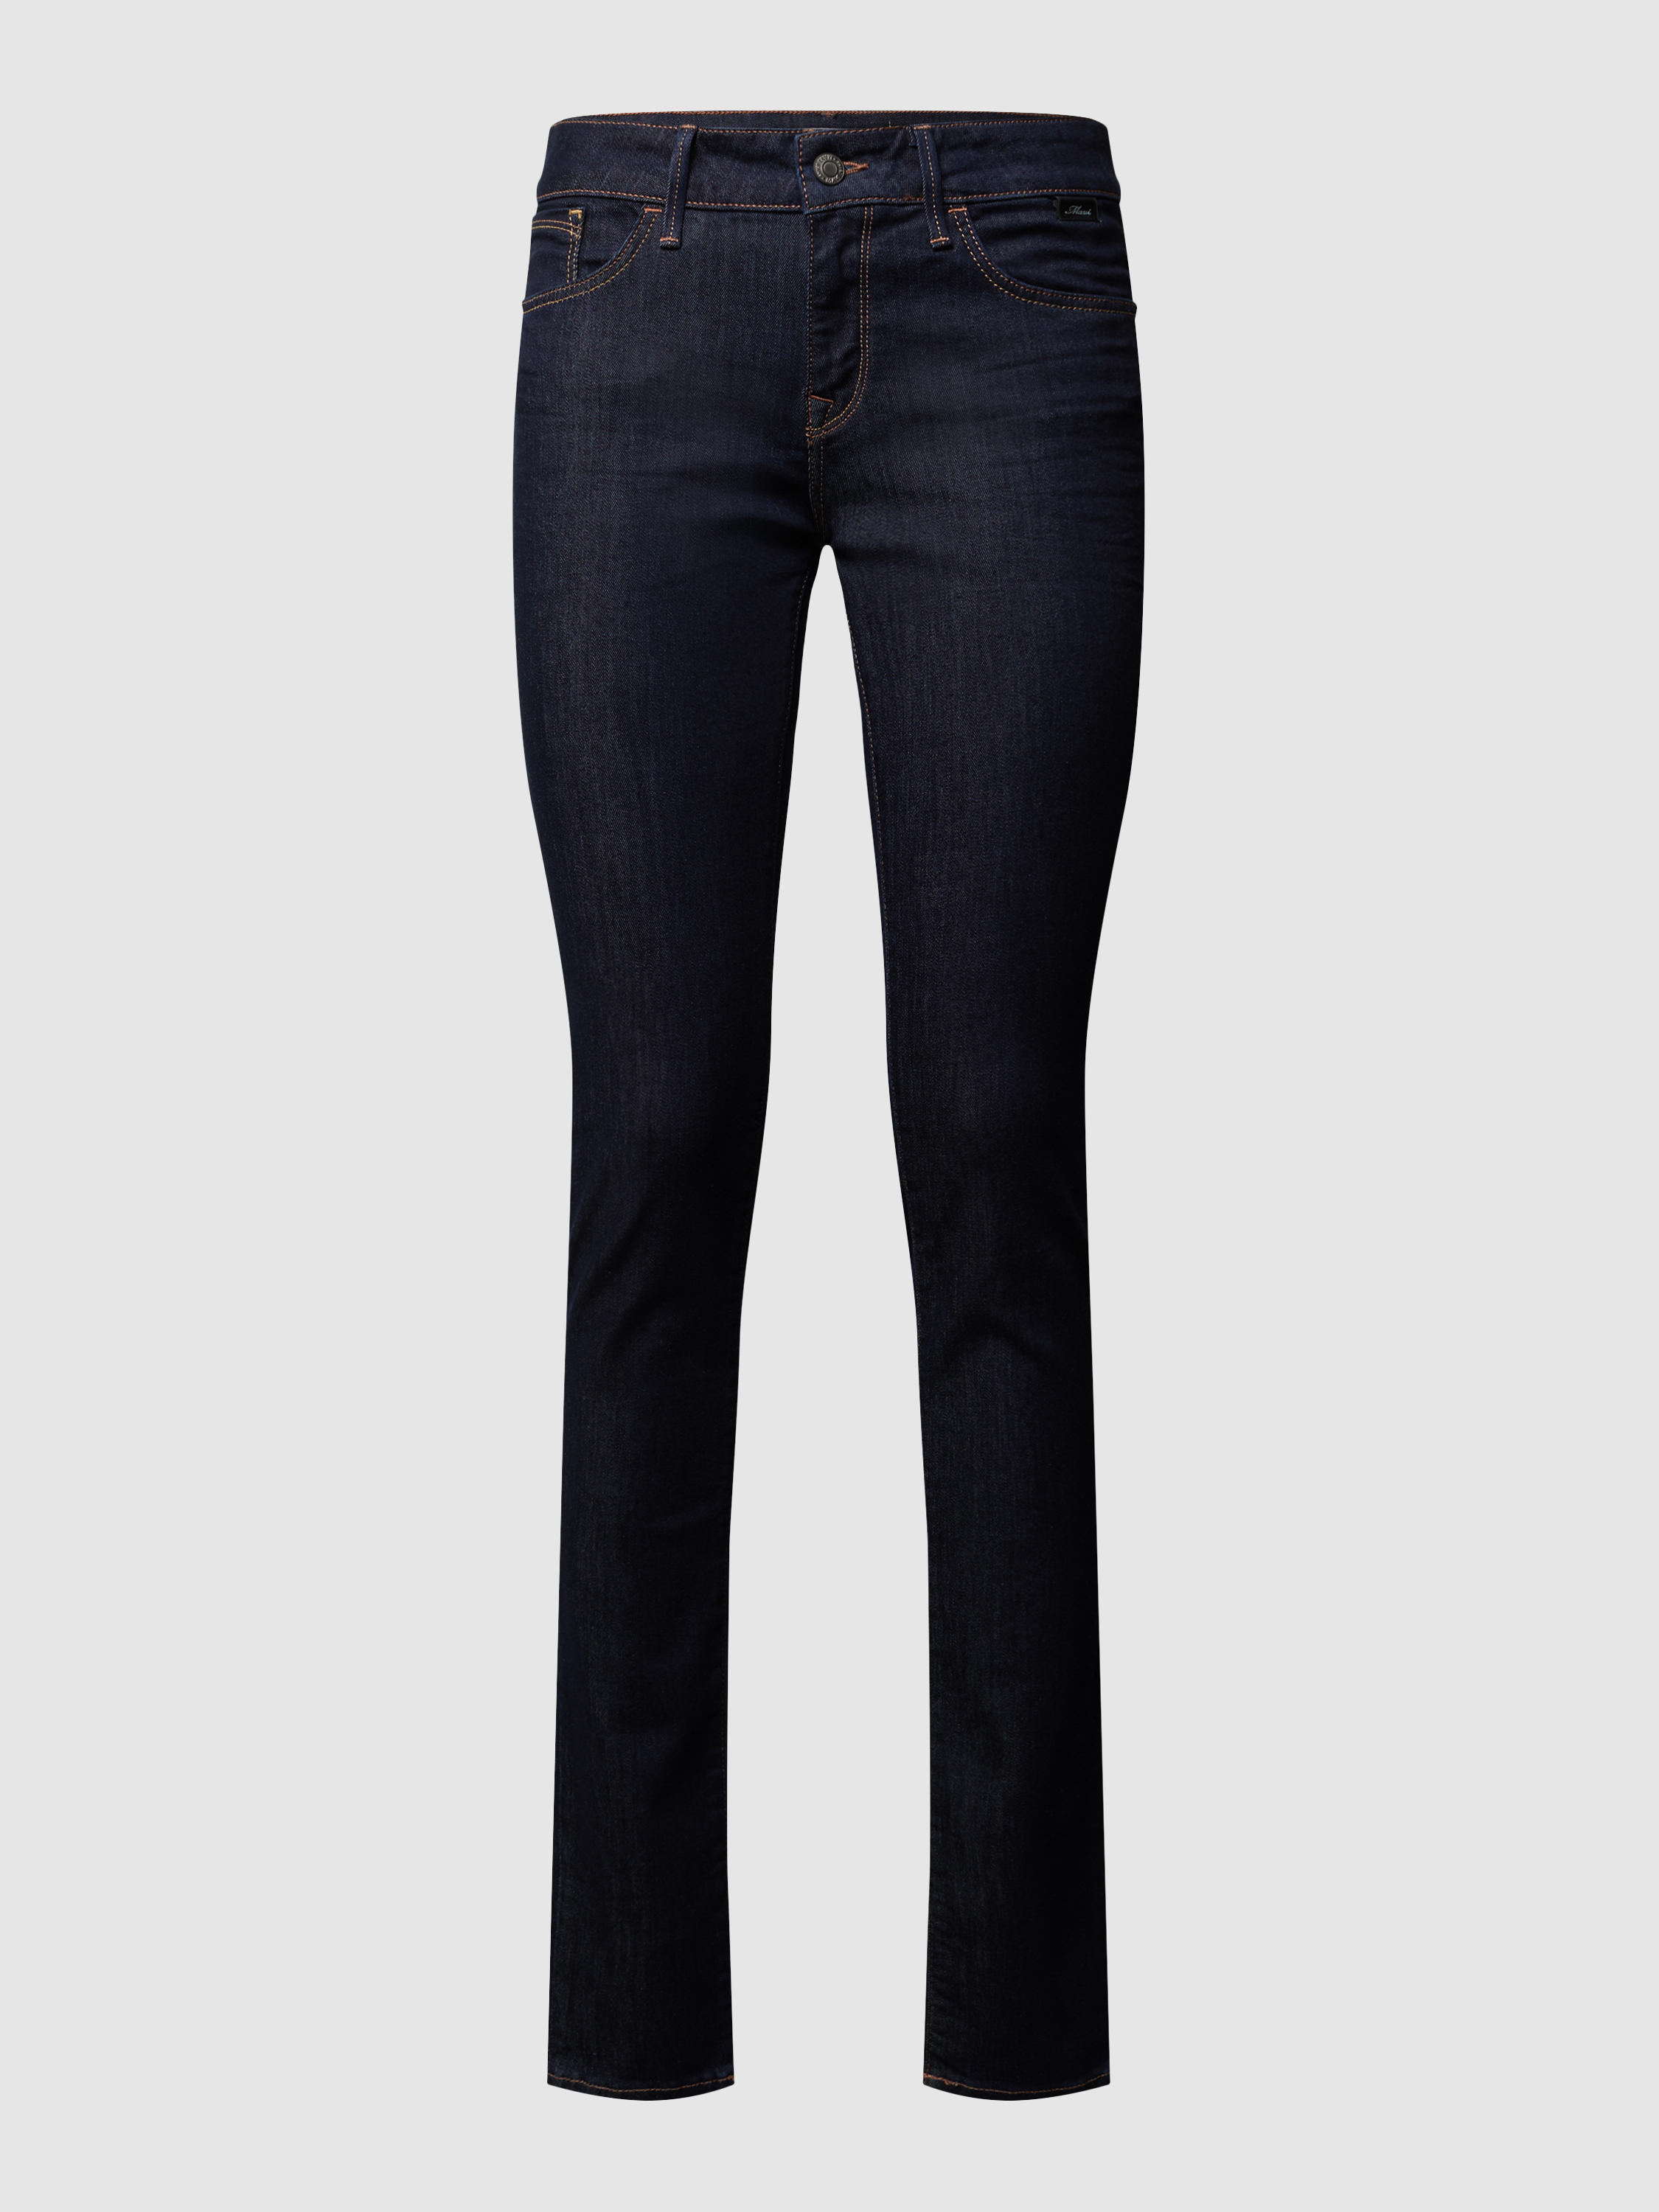 Джинсы женские mavi jeans 1257138 синие 25/30 (доставка из-за рубежа)